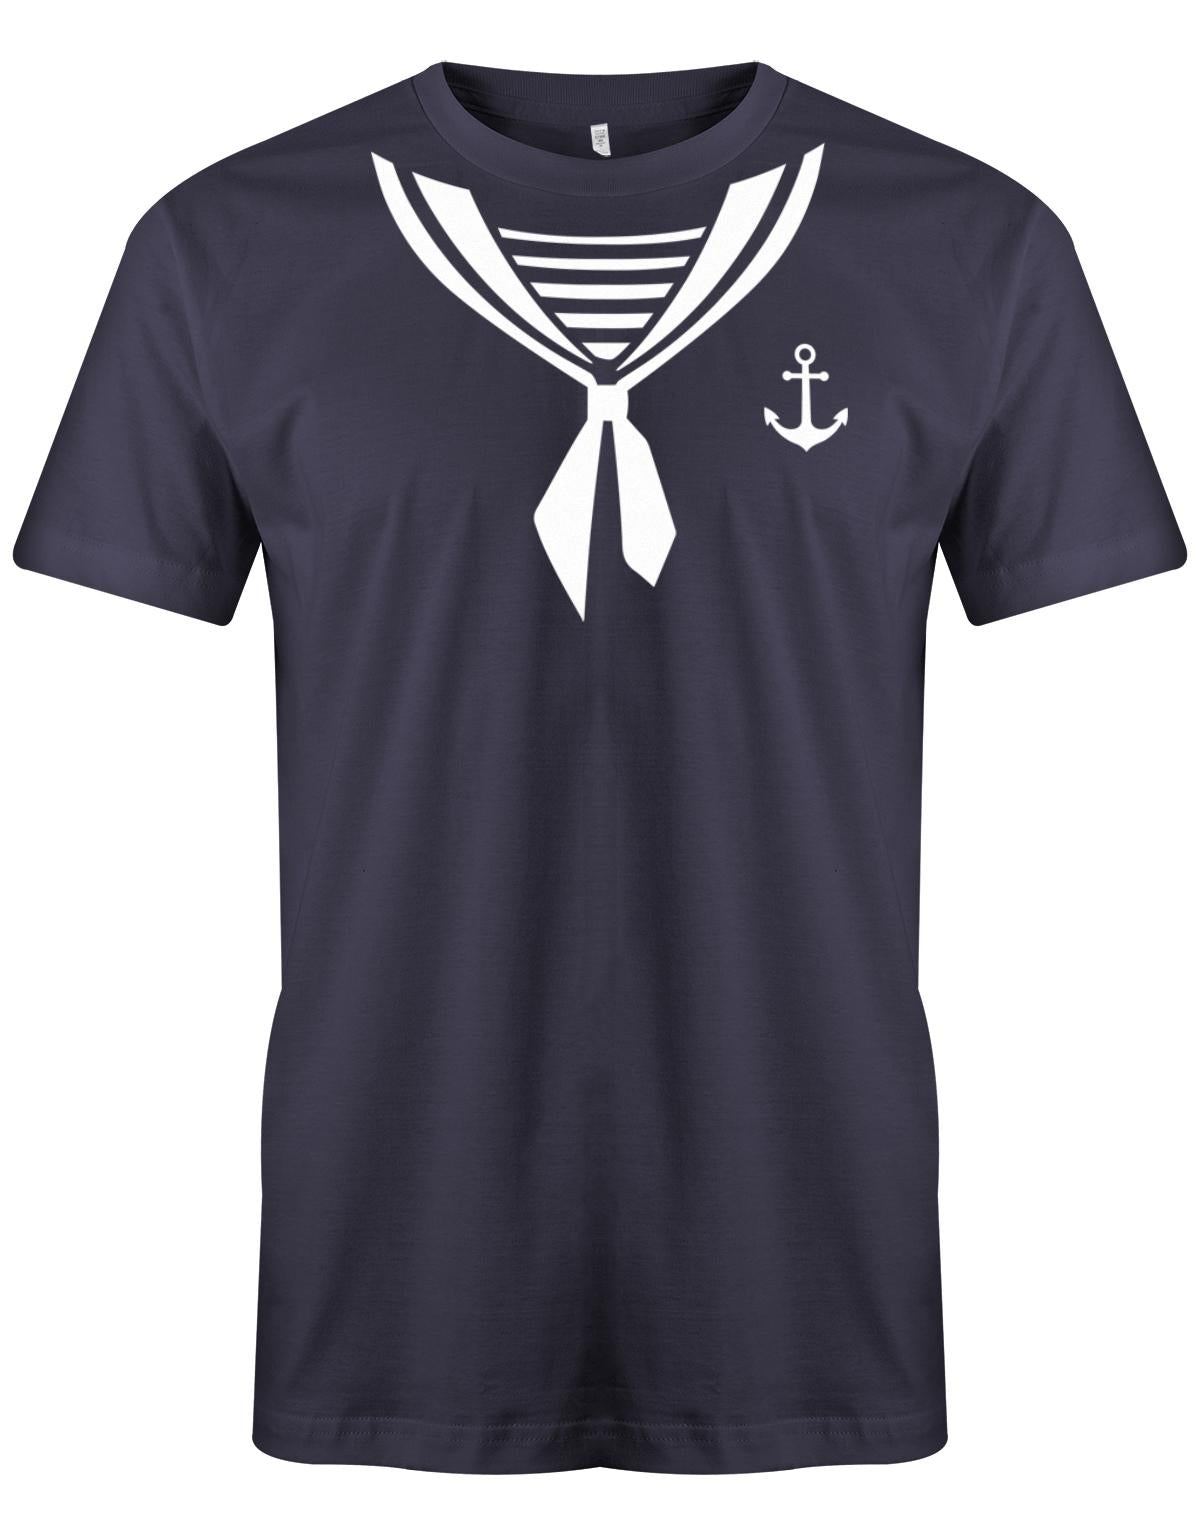 Matrosen Kostüm - Faschinig - Herren T-Shirt Navy